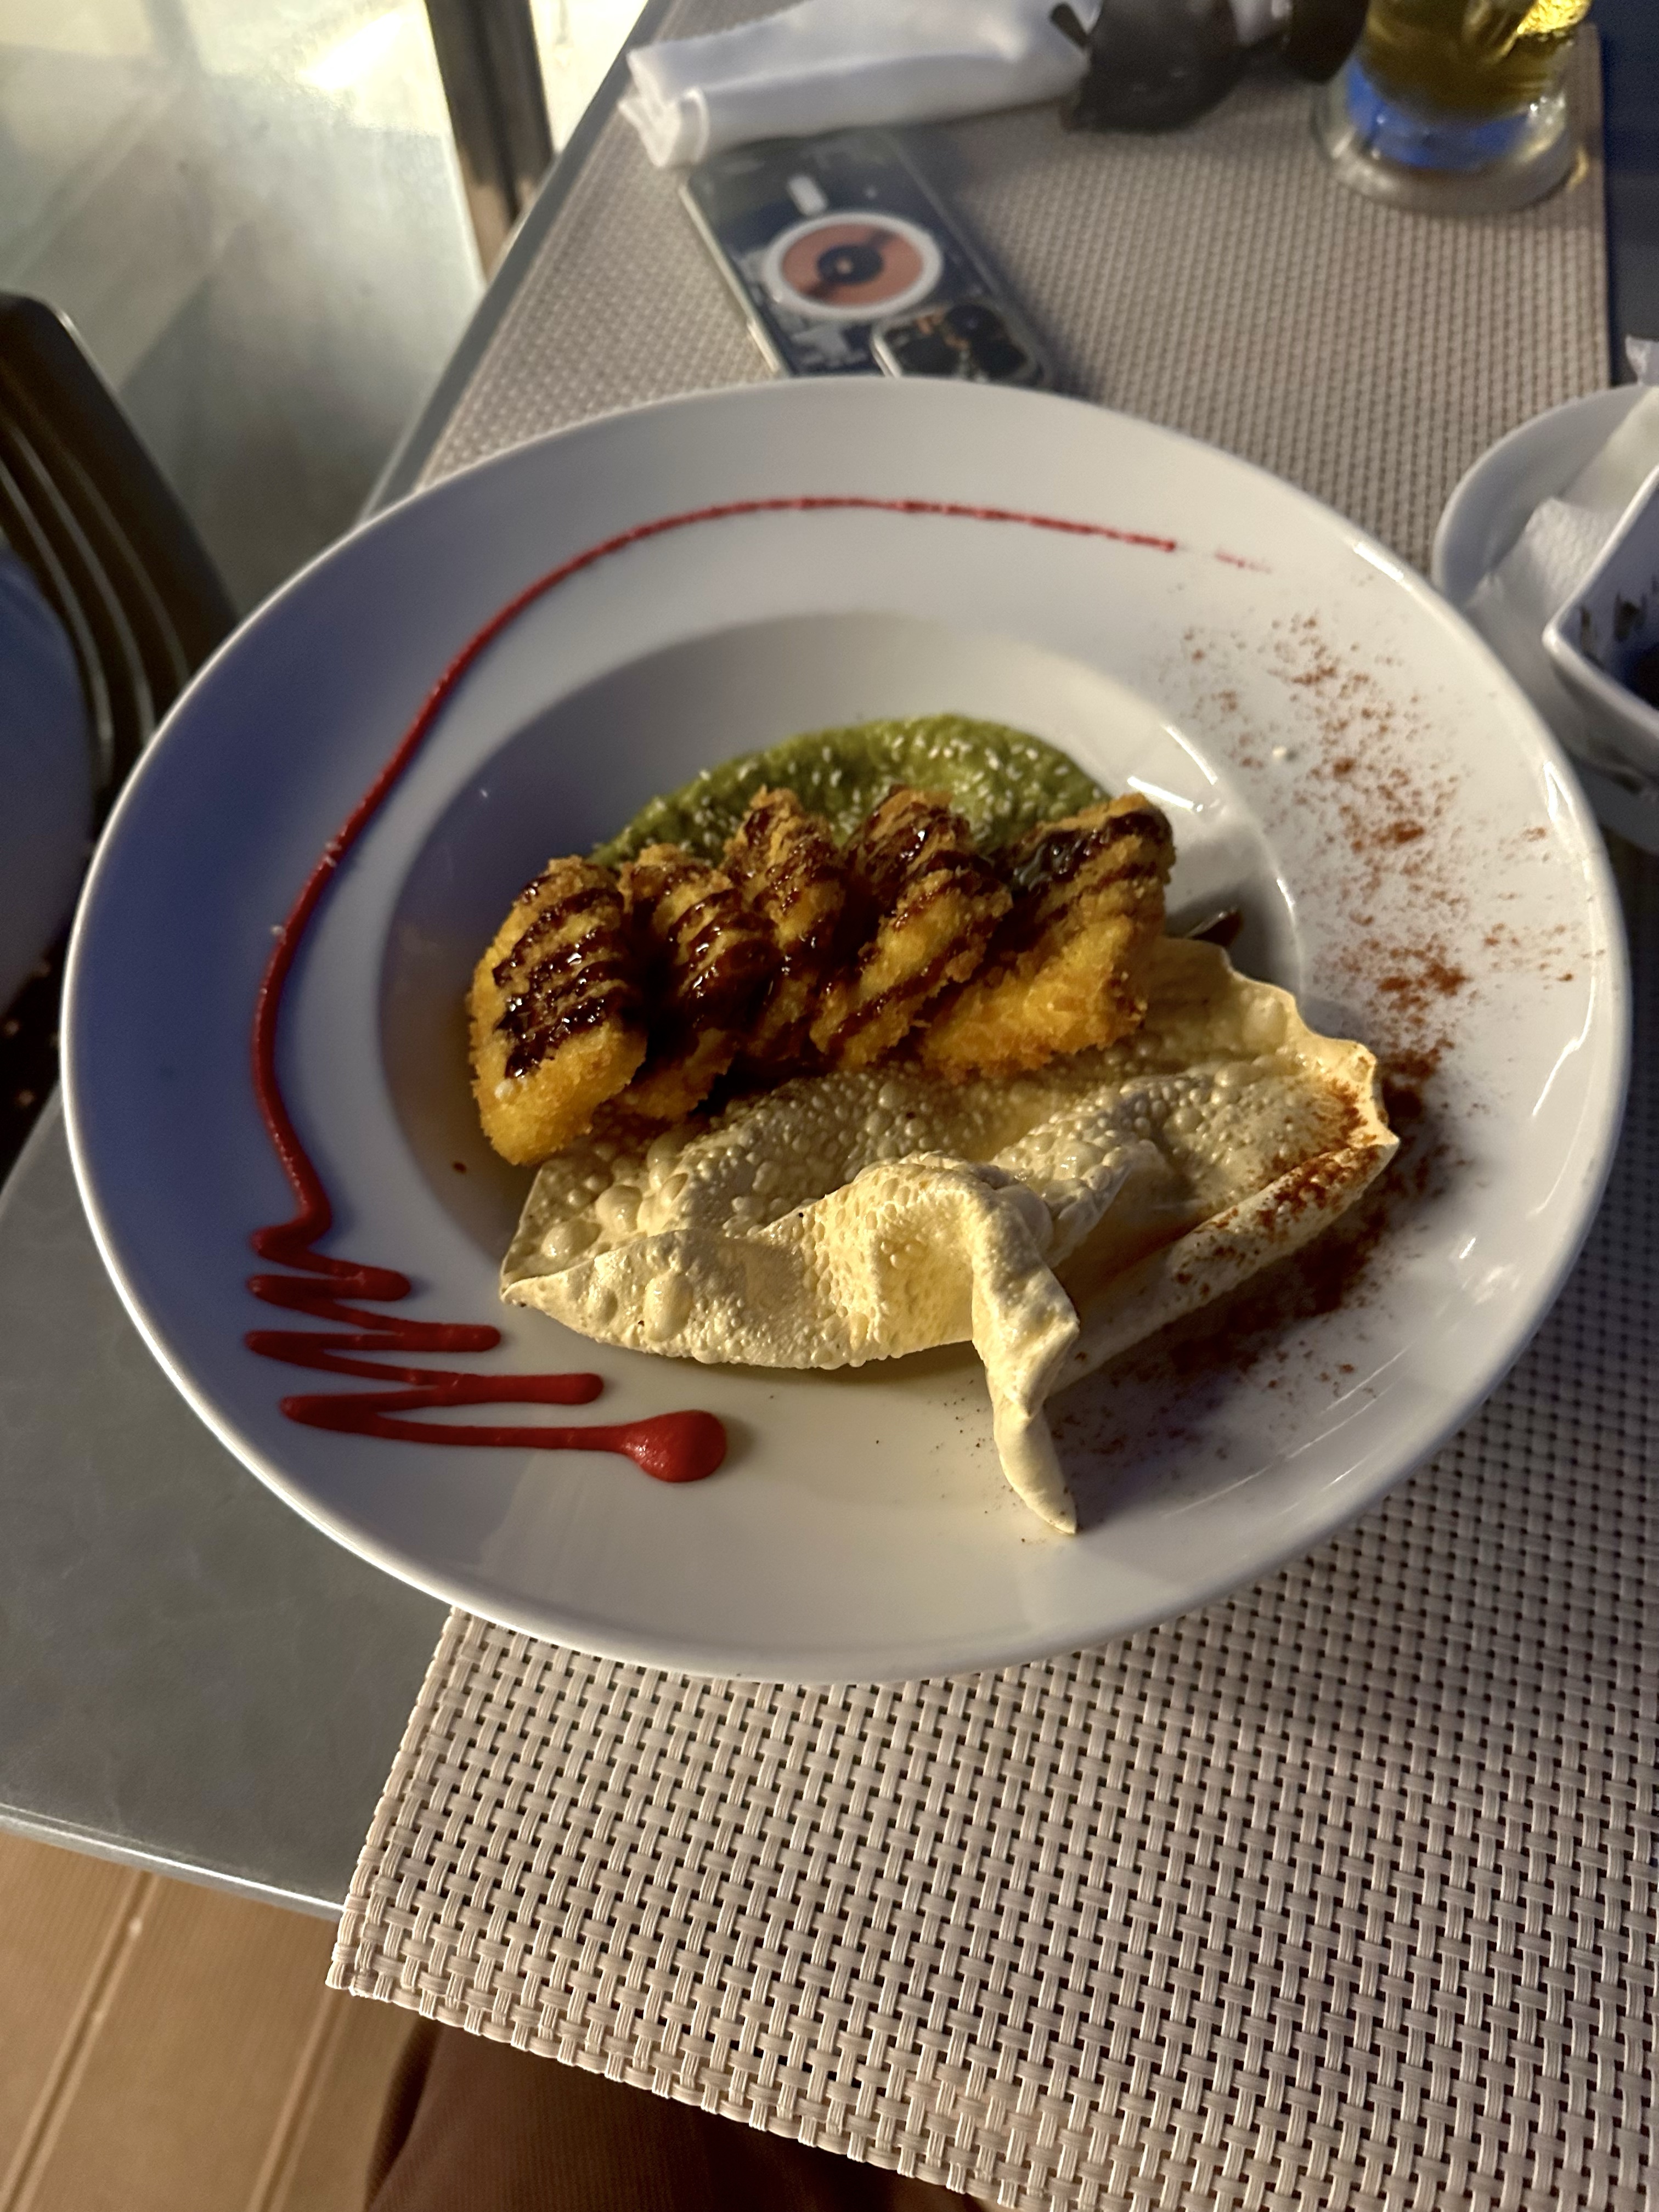 Fried camambert bites with guacamole